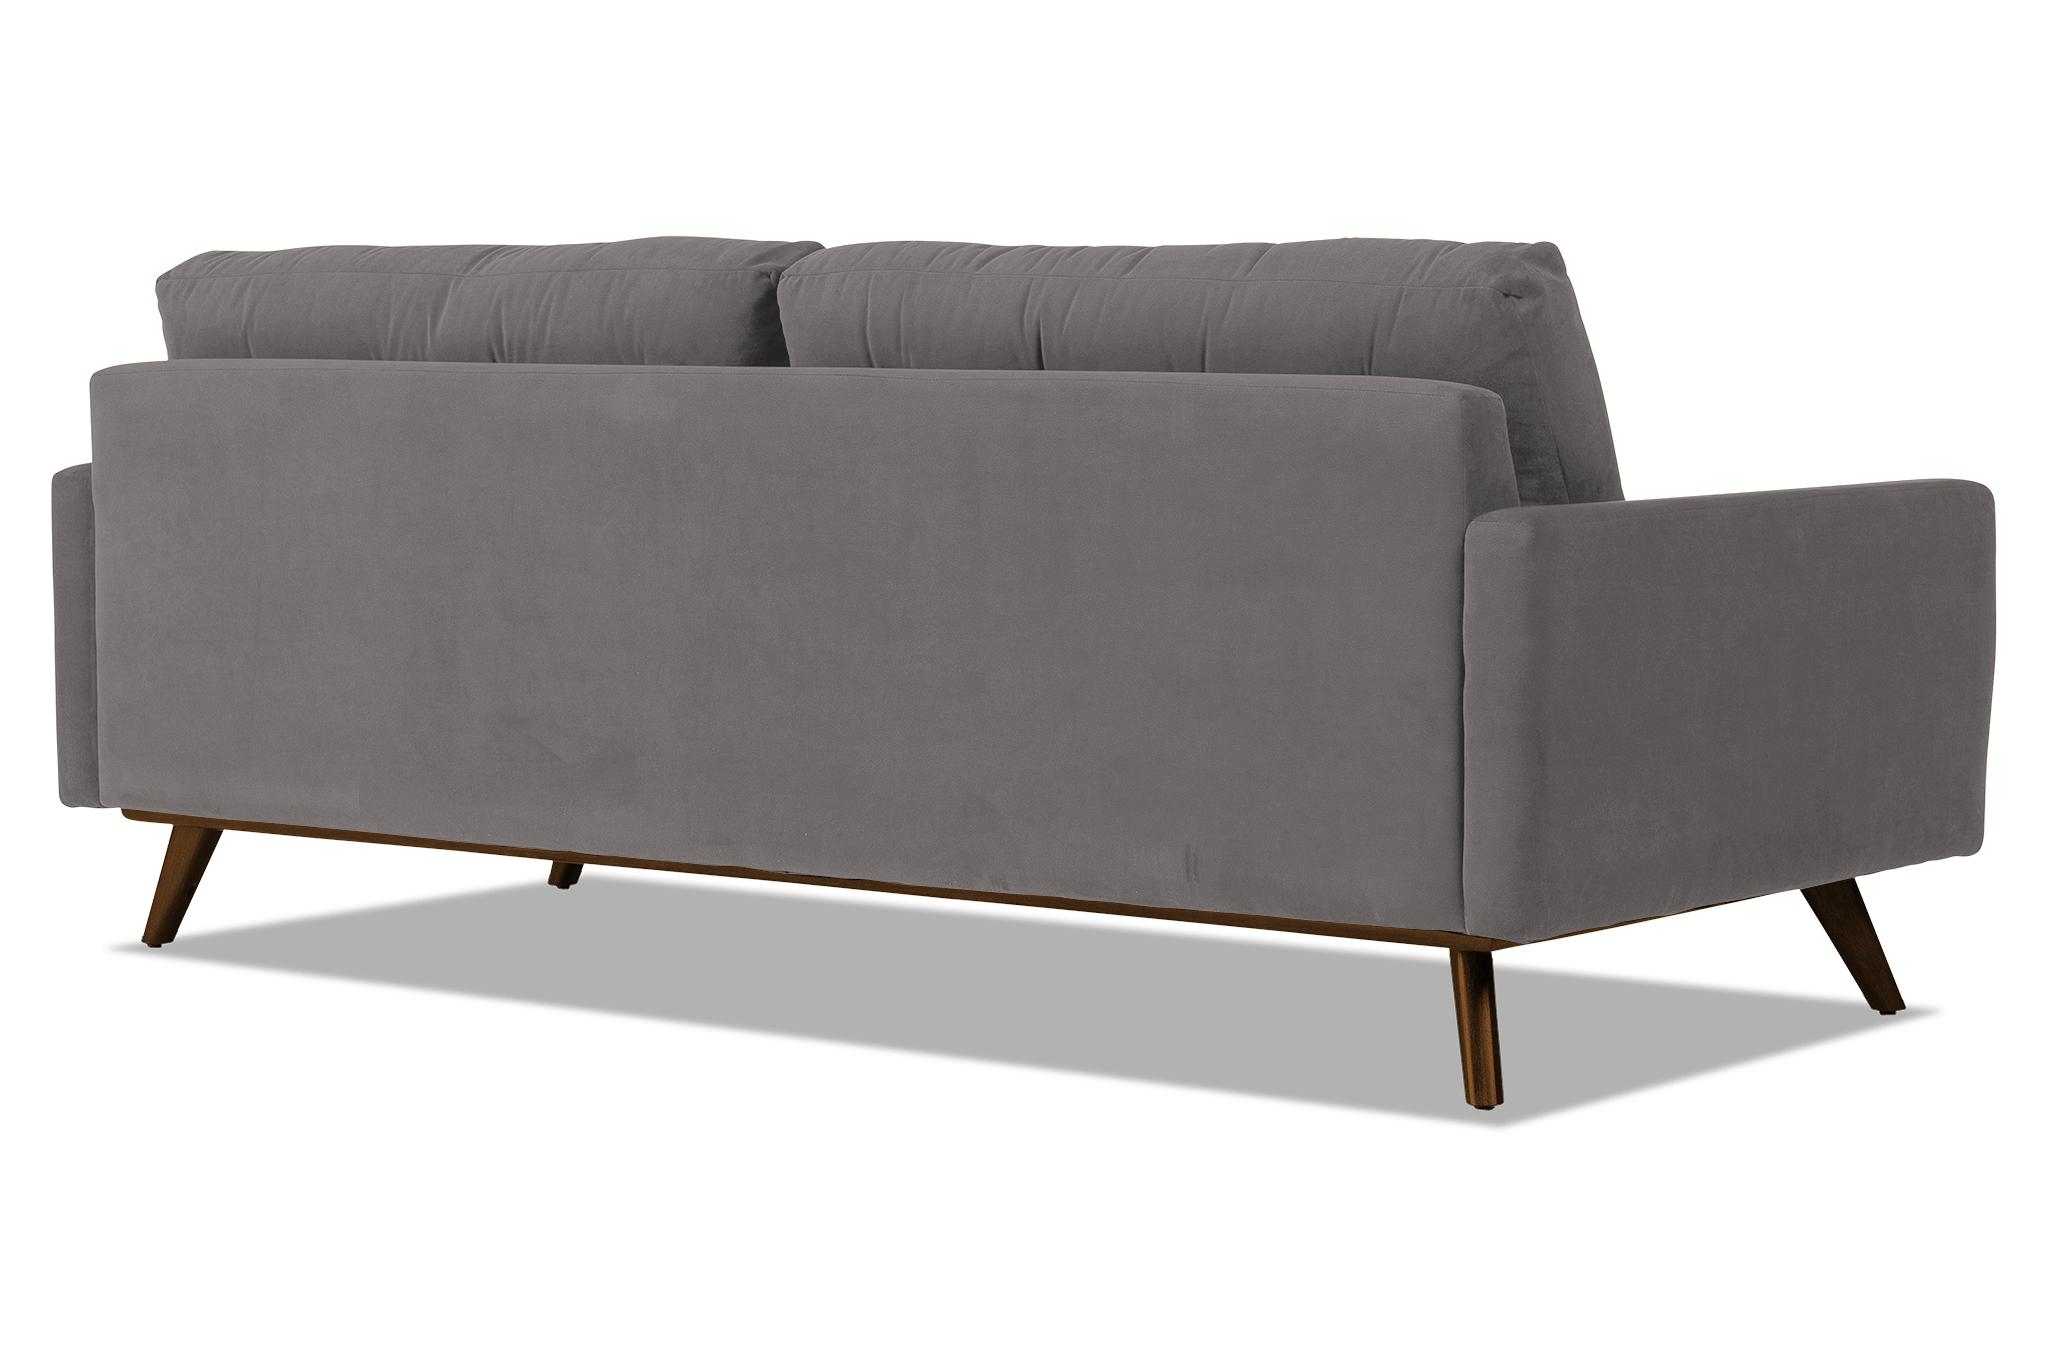 Gray Hopson Mid Century Modern Sofa - Taylor Felt Grey - Mocha - Image 3